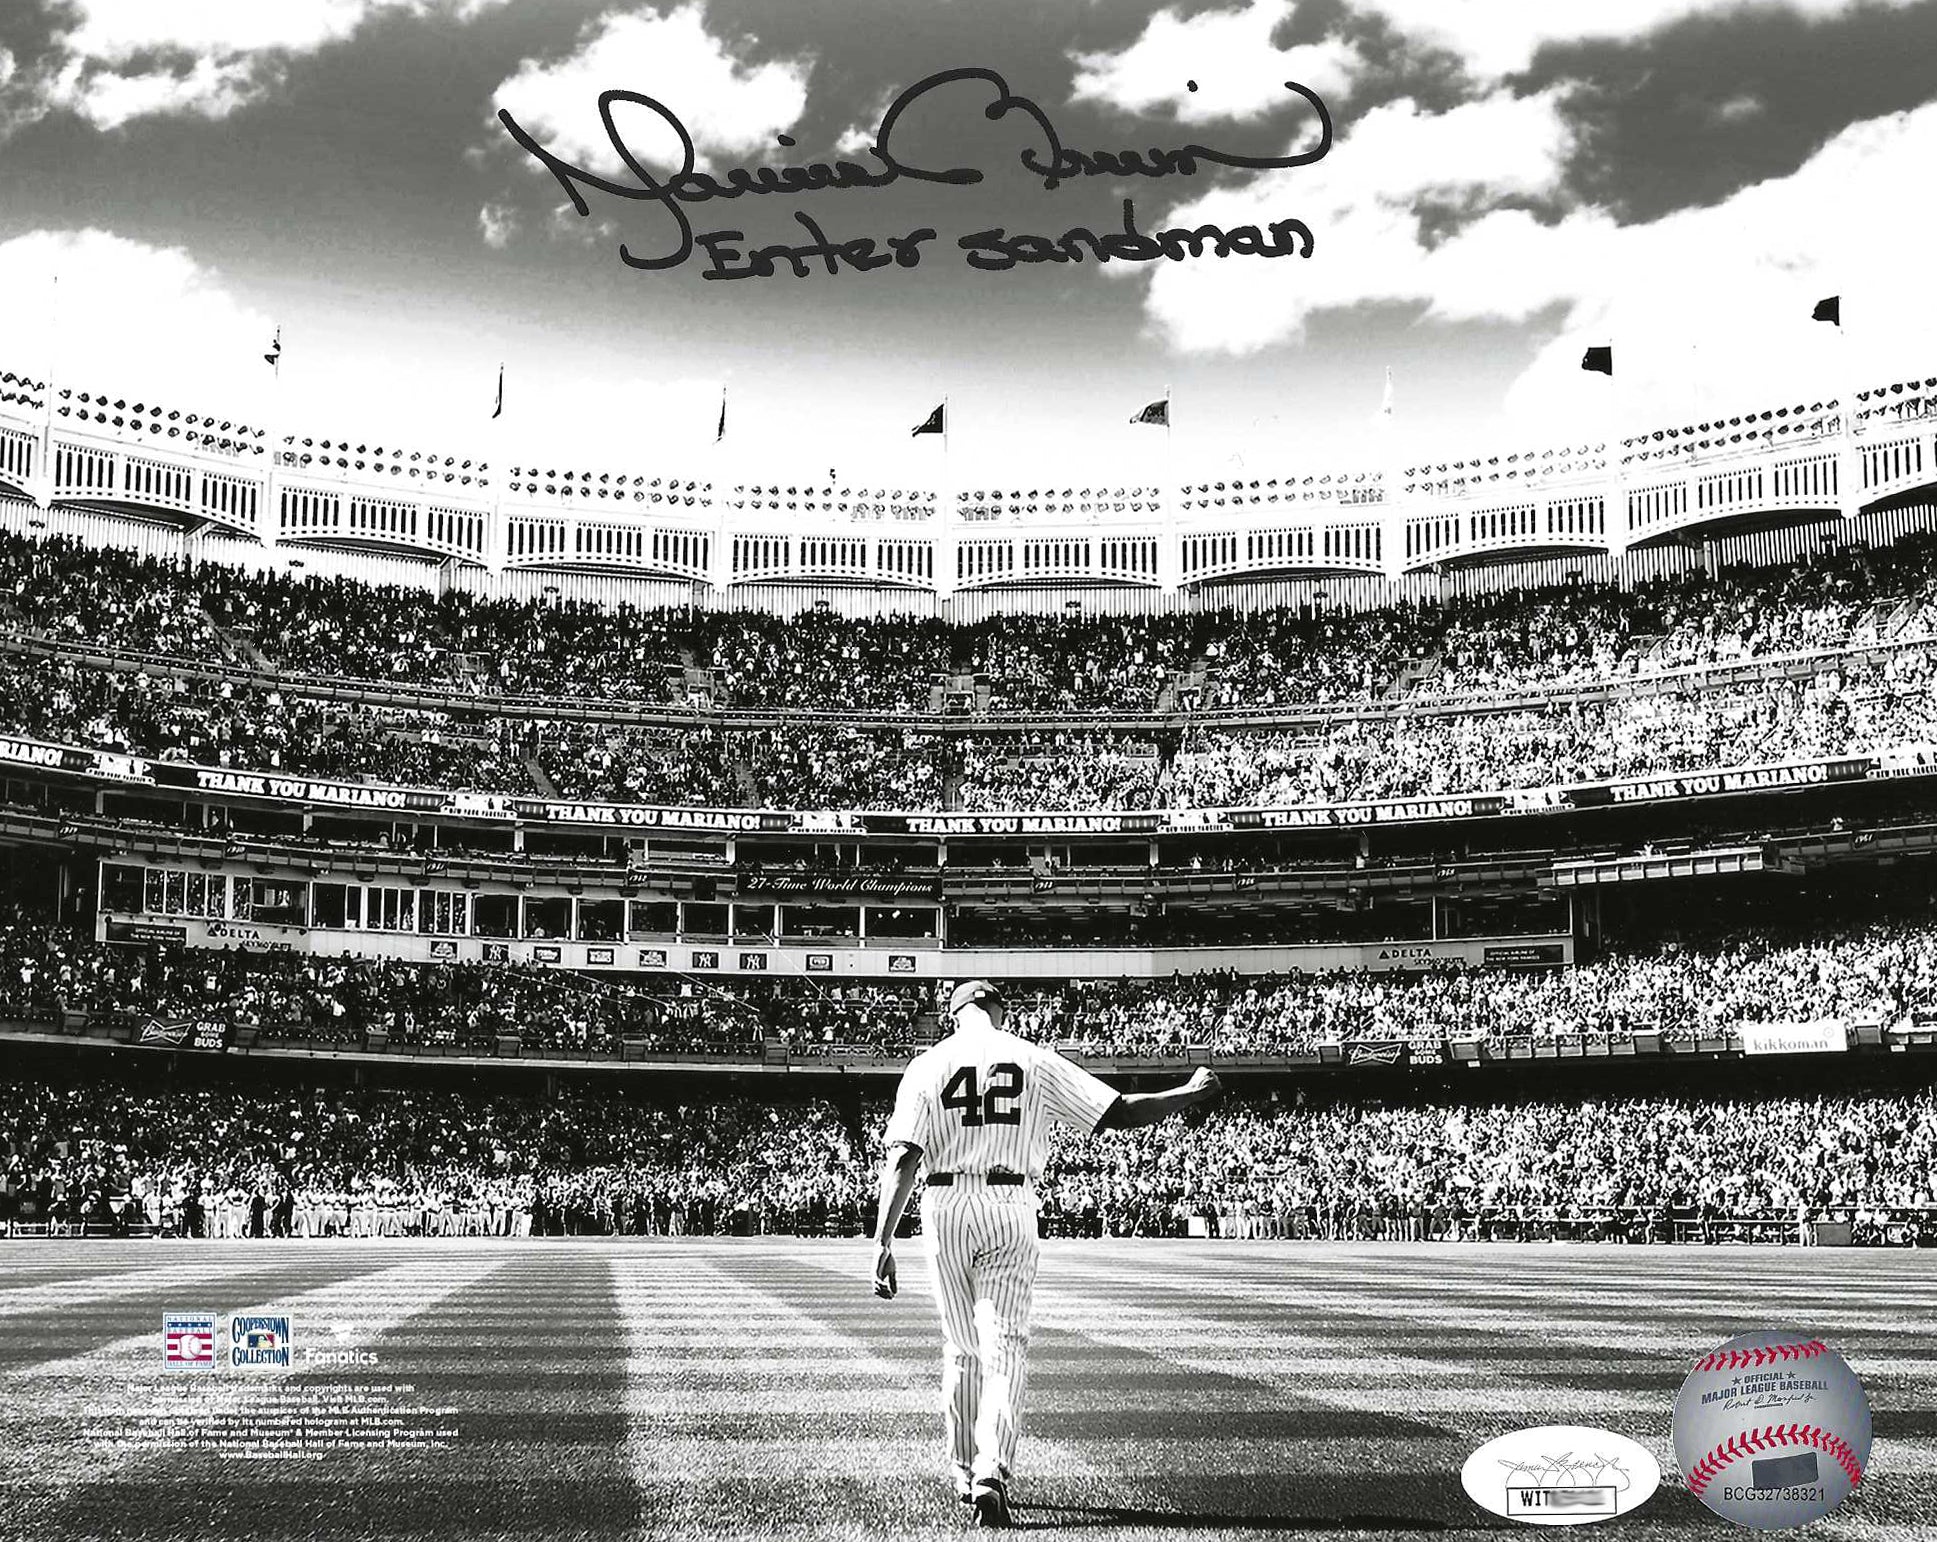 New York Yankees Mariano Rivera "Enter Sandman" Autographed Black & White 8x10 Photo Picture